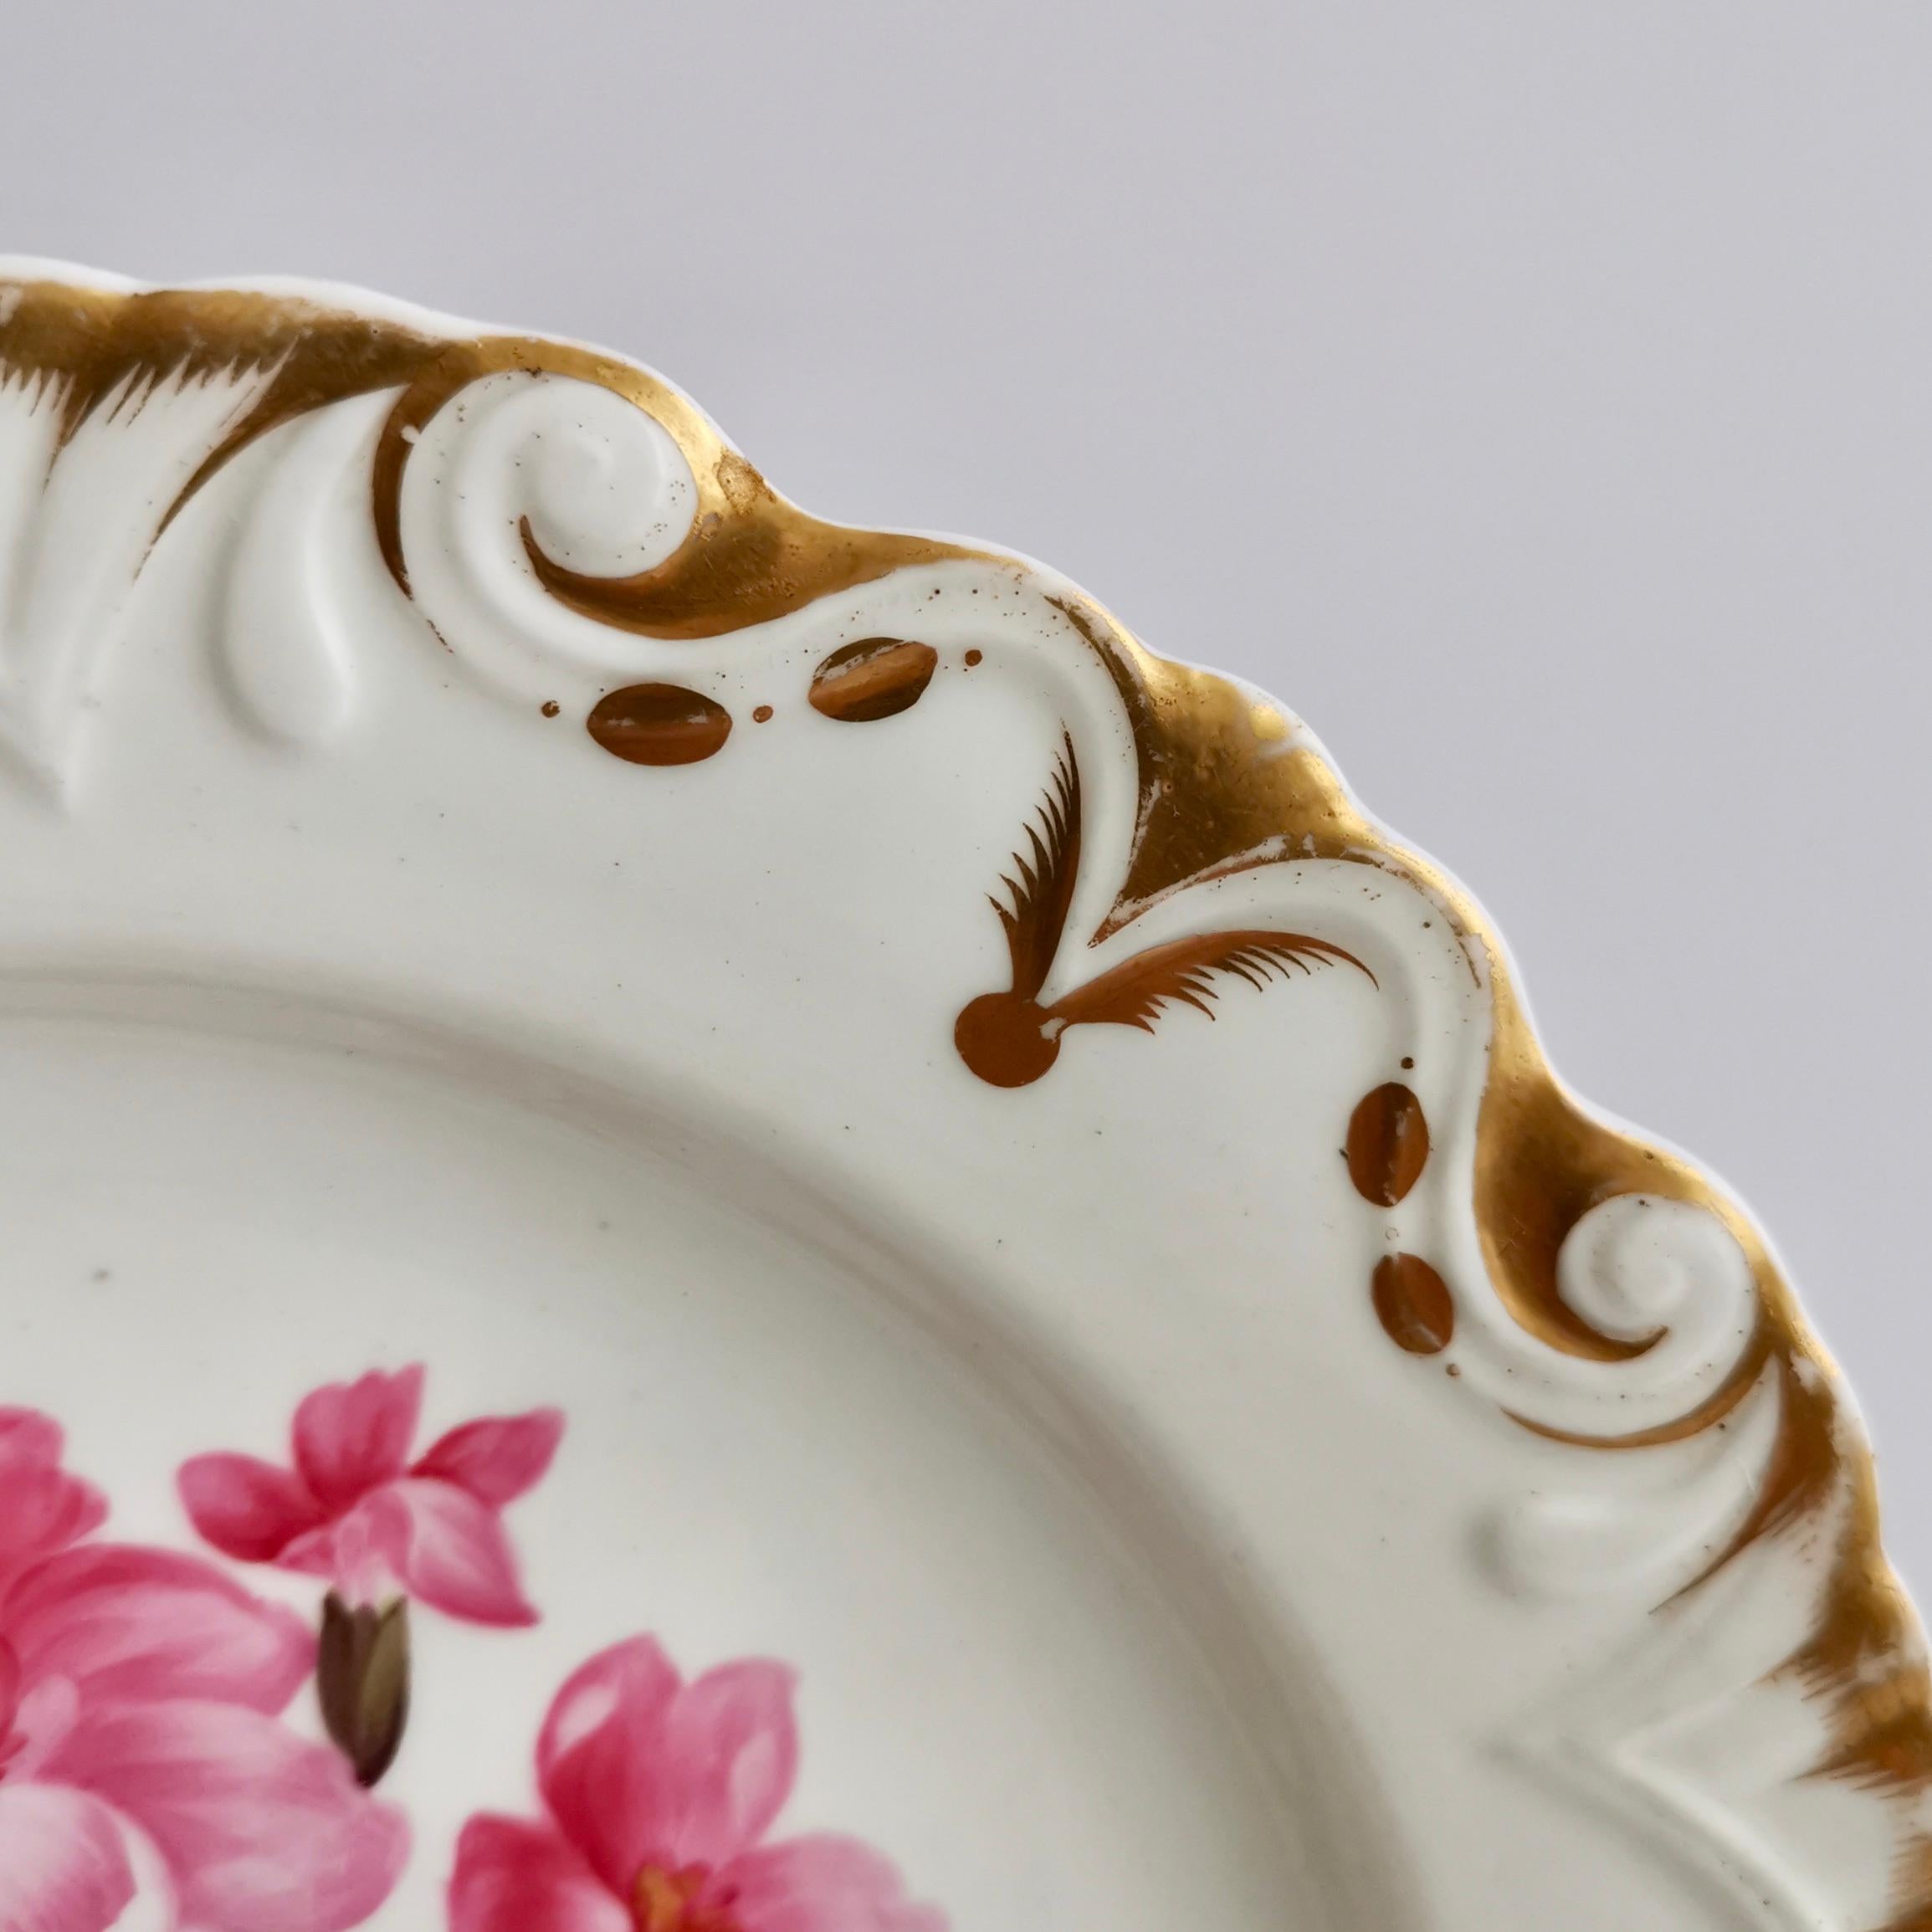 Machin Porcelain Plate, White, Moustache Shape with Pink Flower, Regency 2